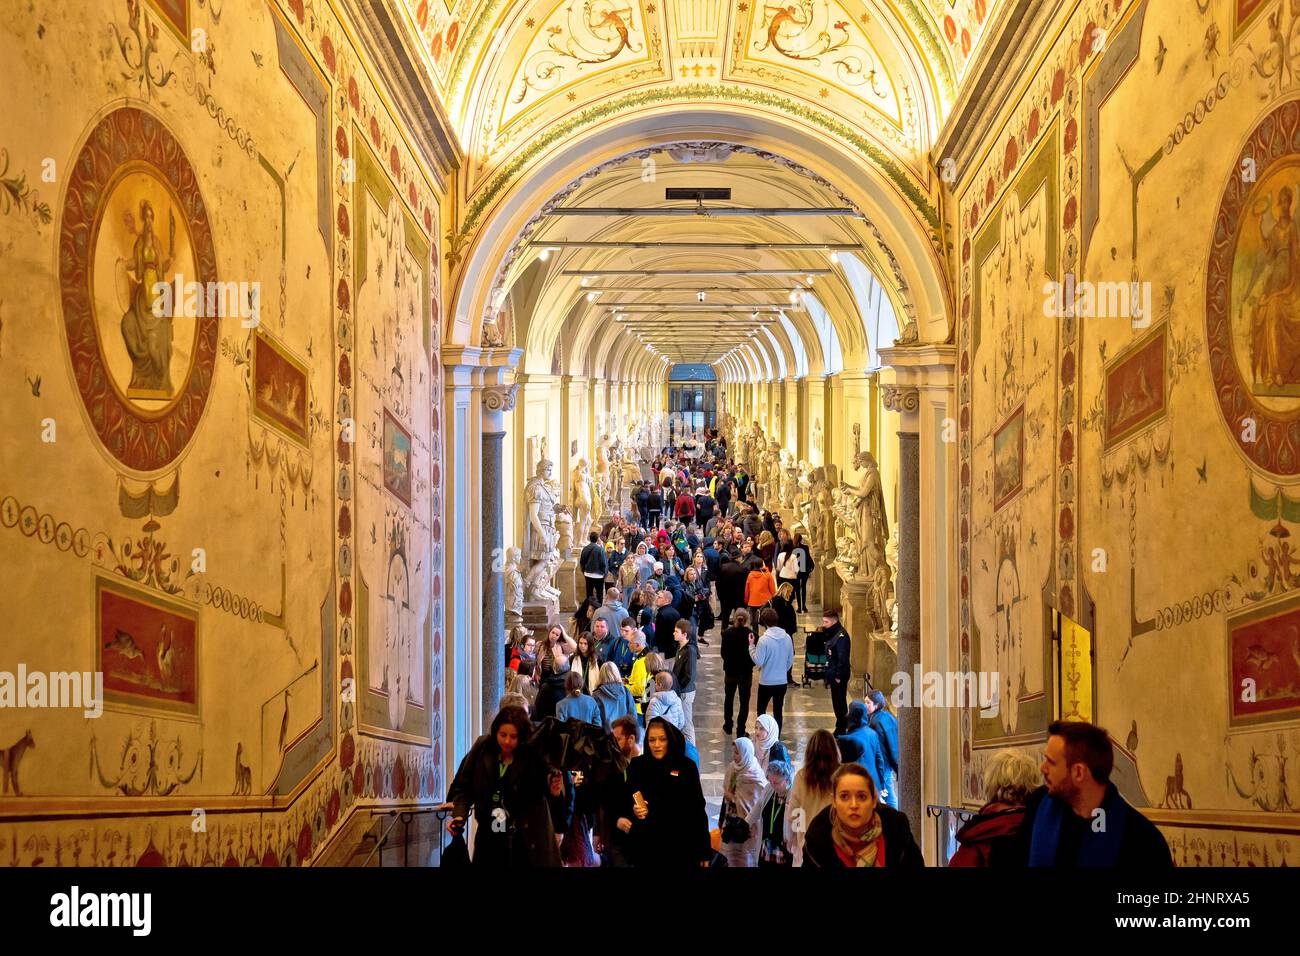 Vatican museum art hallway and tourist crowd view. Stock Photo